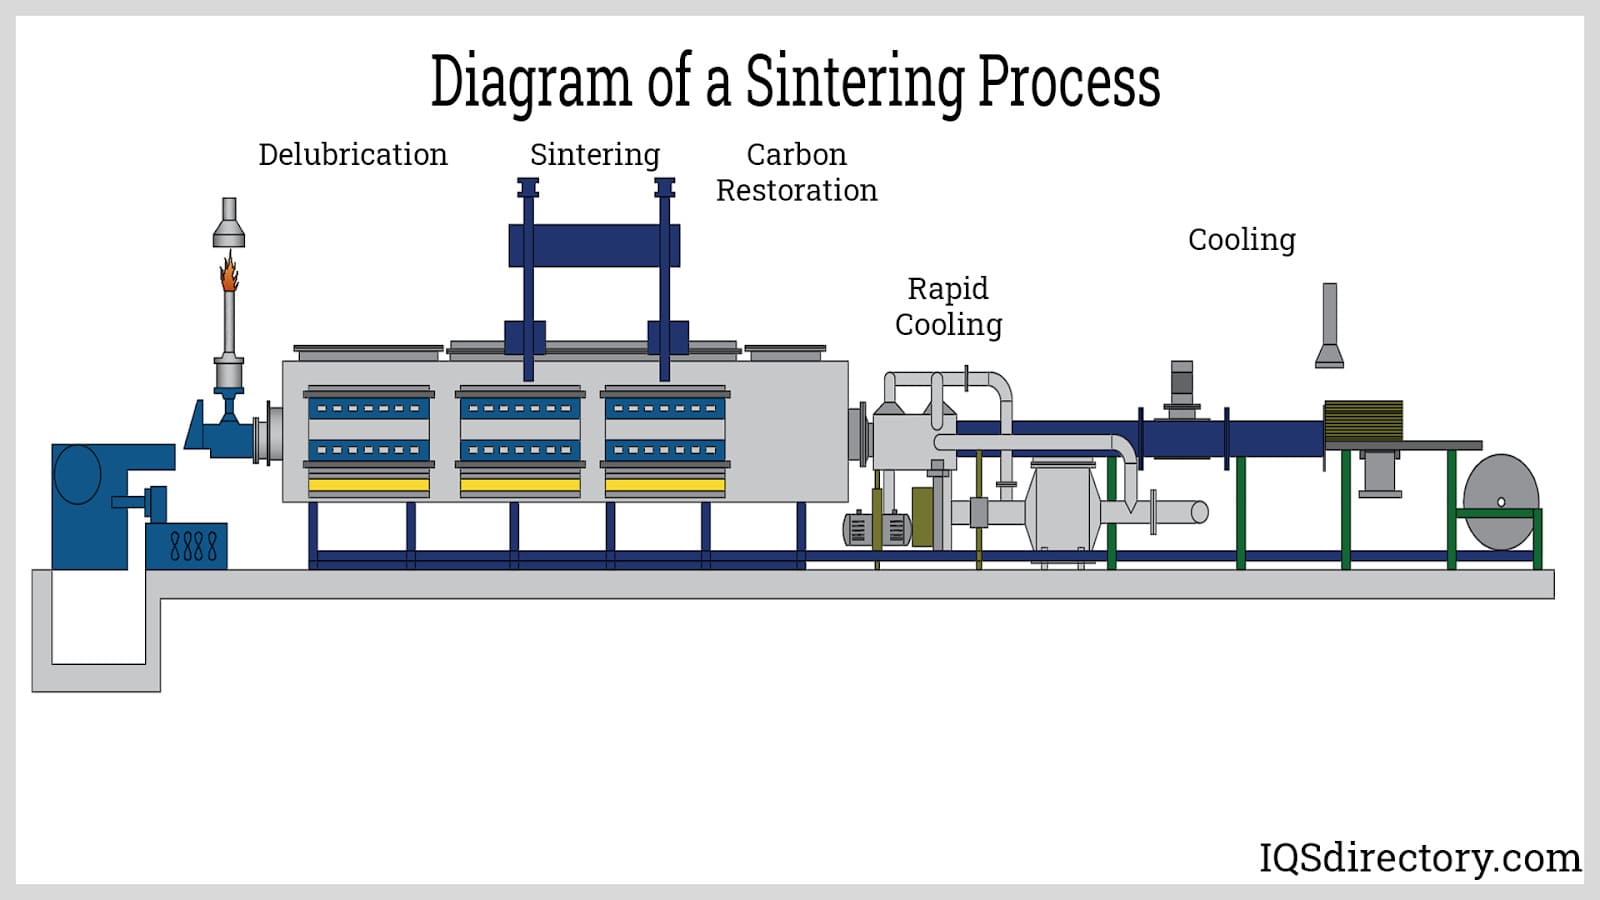 Diagram of a Sintering Process